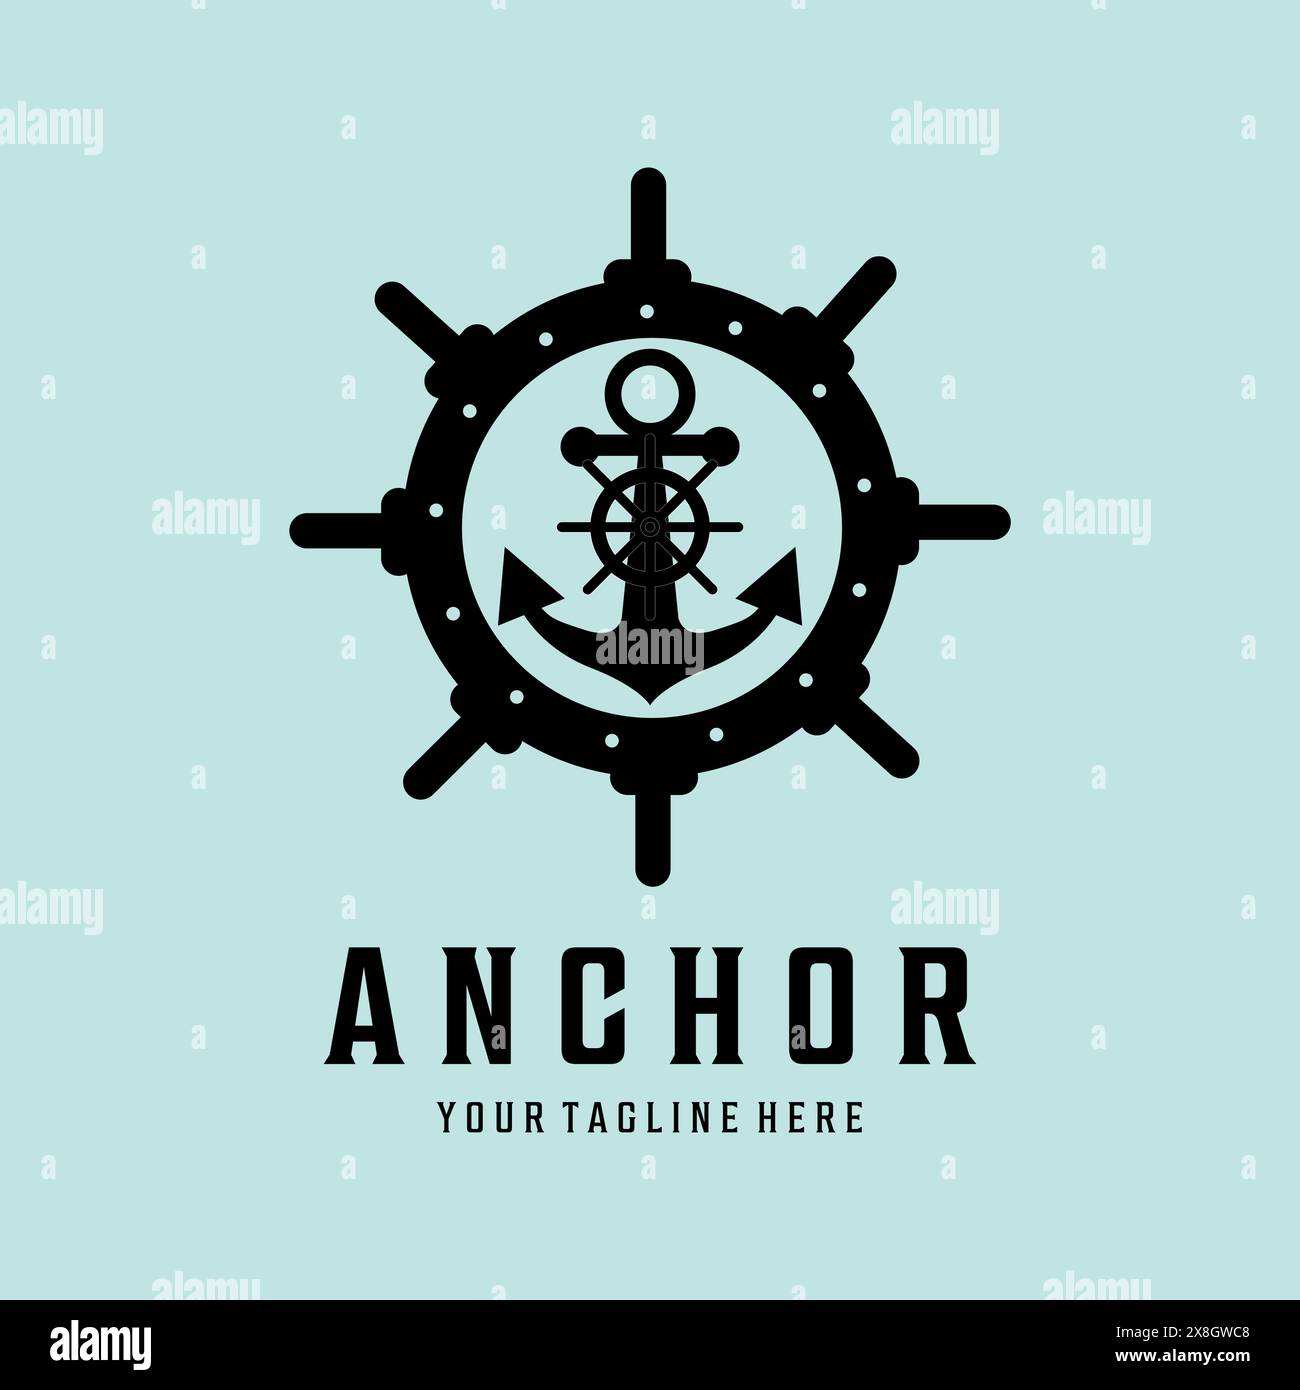 anchor vintage retro minimalist logo vector illustration design Stock Vector